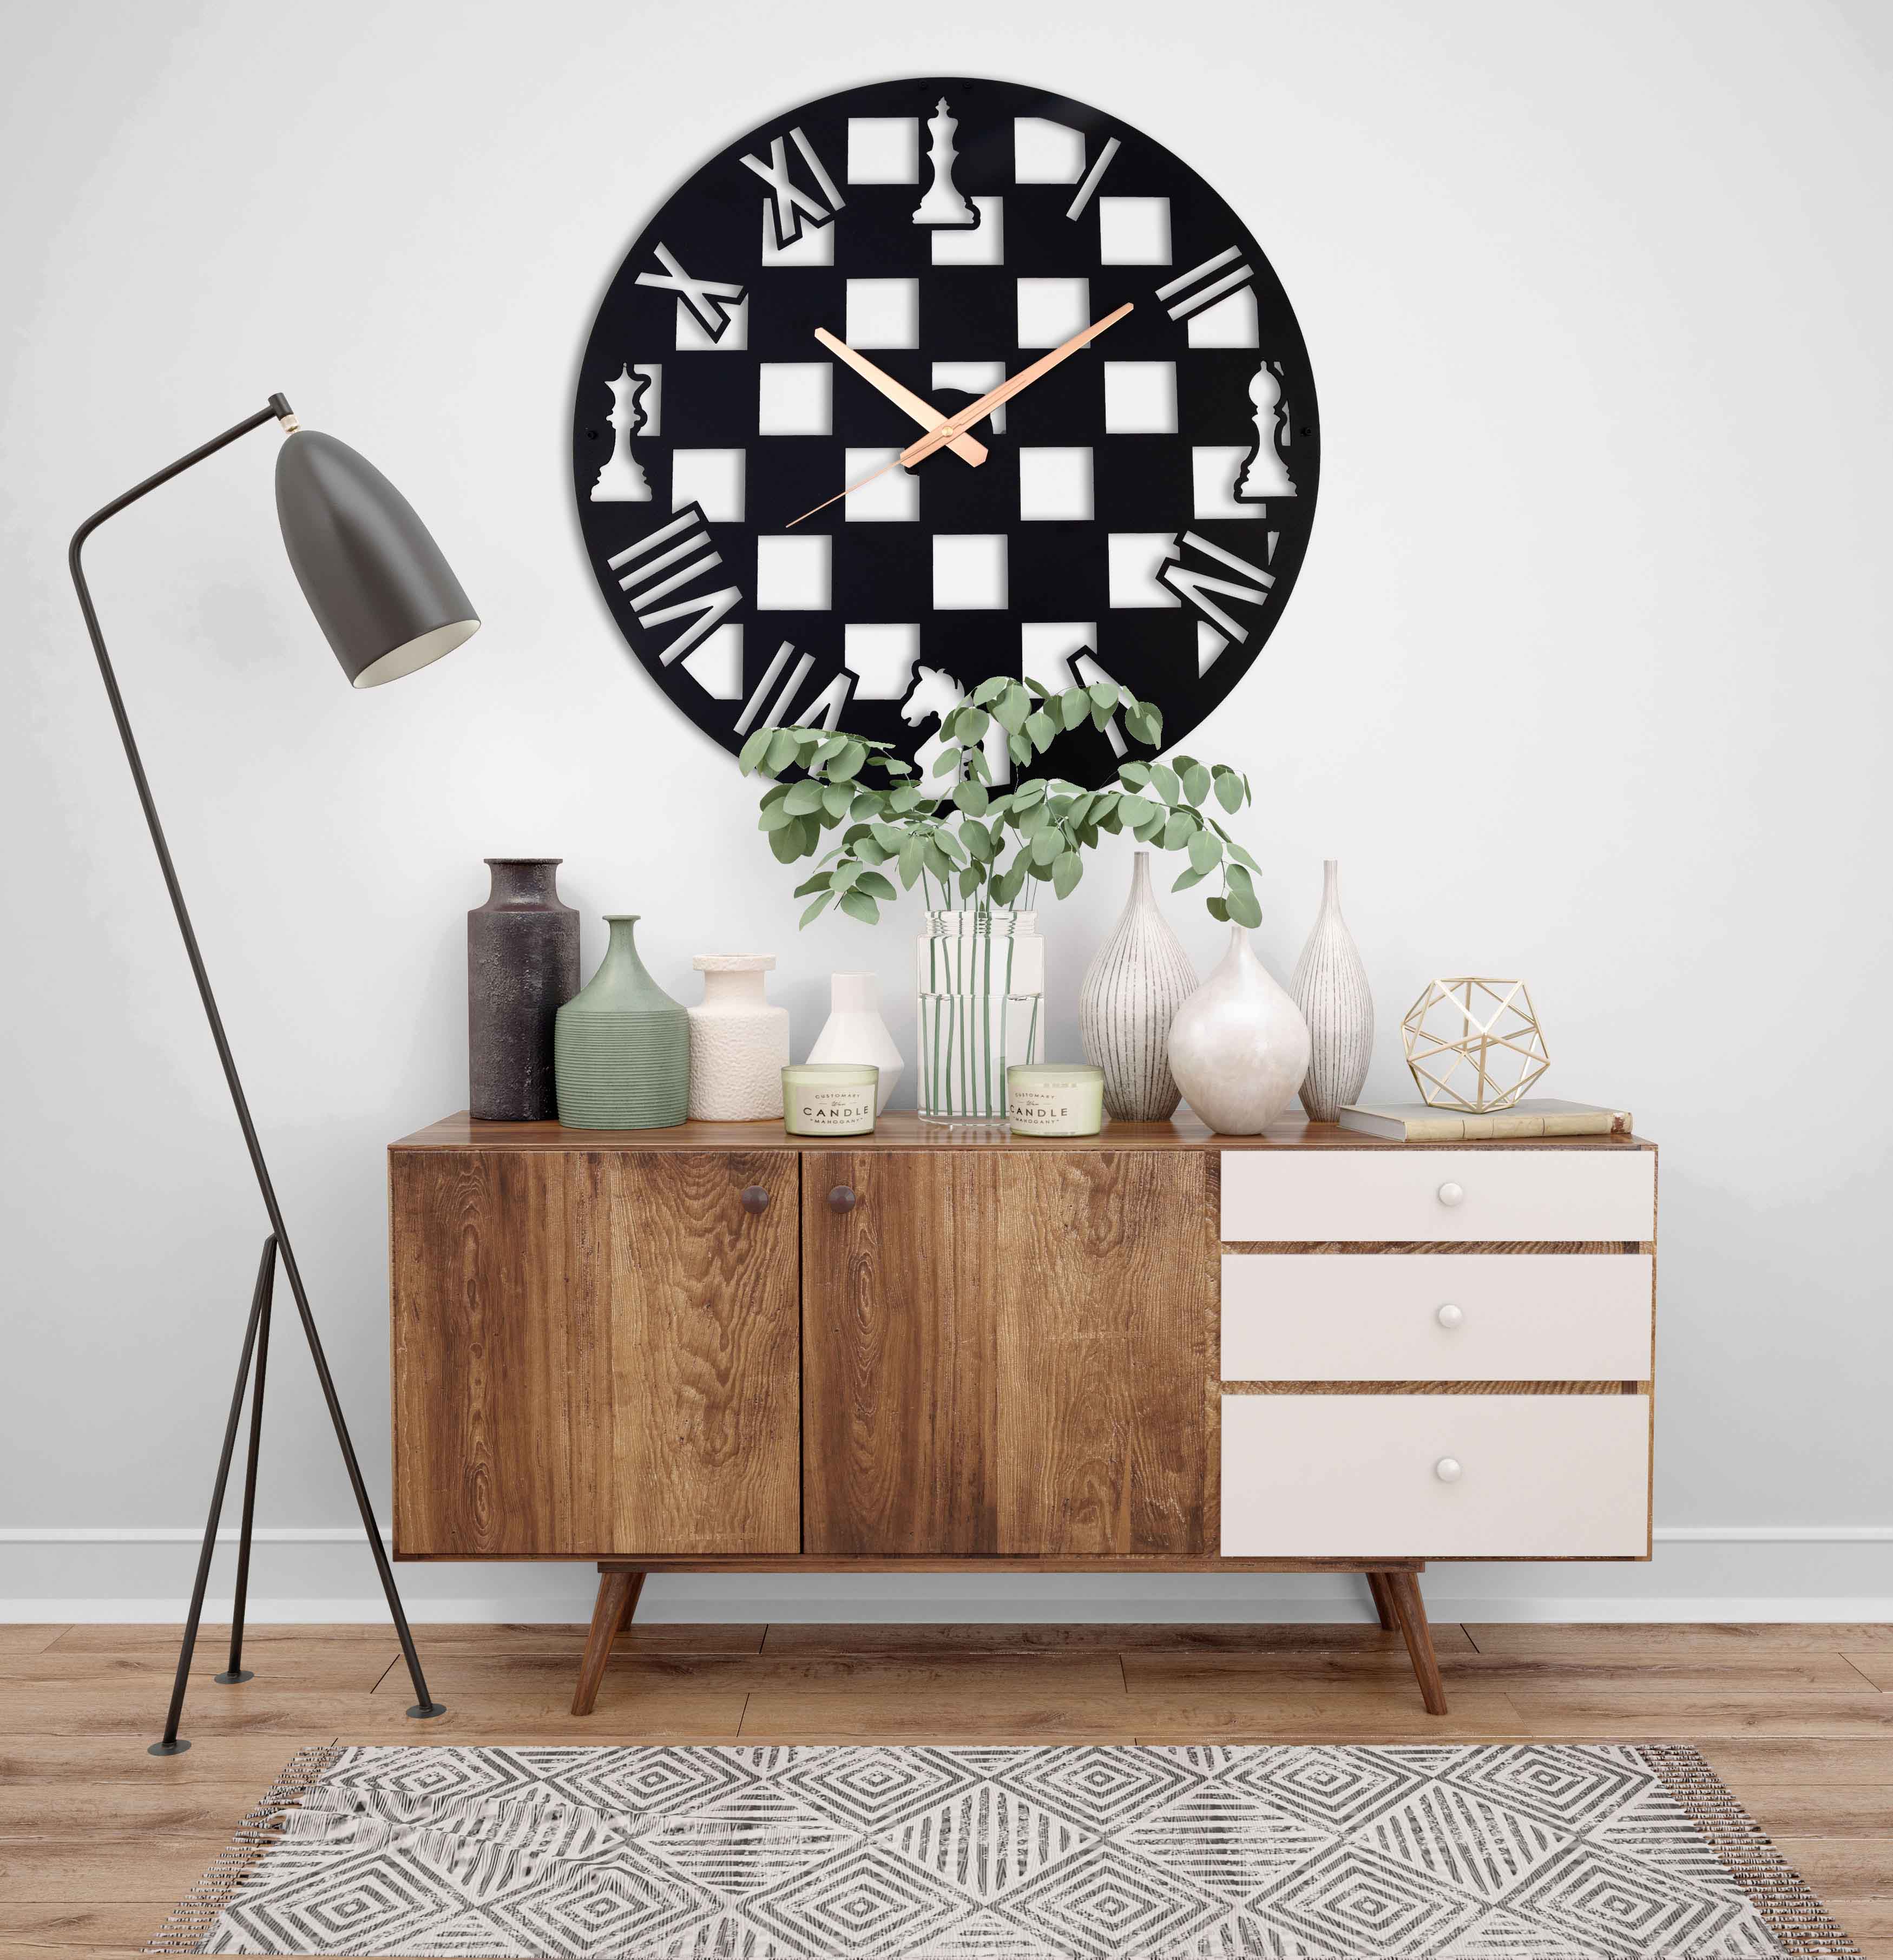 Chess Wall Clock, Oversized Wall Clock, Modern Wall Clock, Unique Wall Clock, Silent Wall Clock, Large Wall Clock, Game Room Clocks For Wal